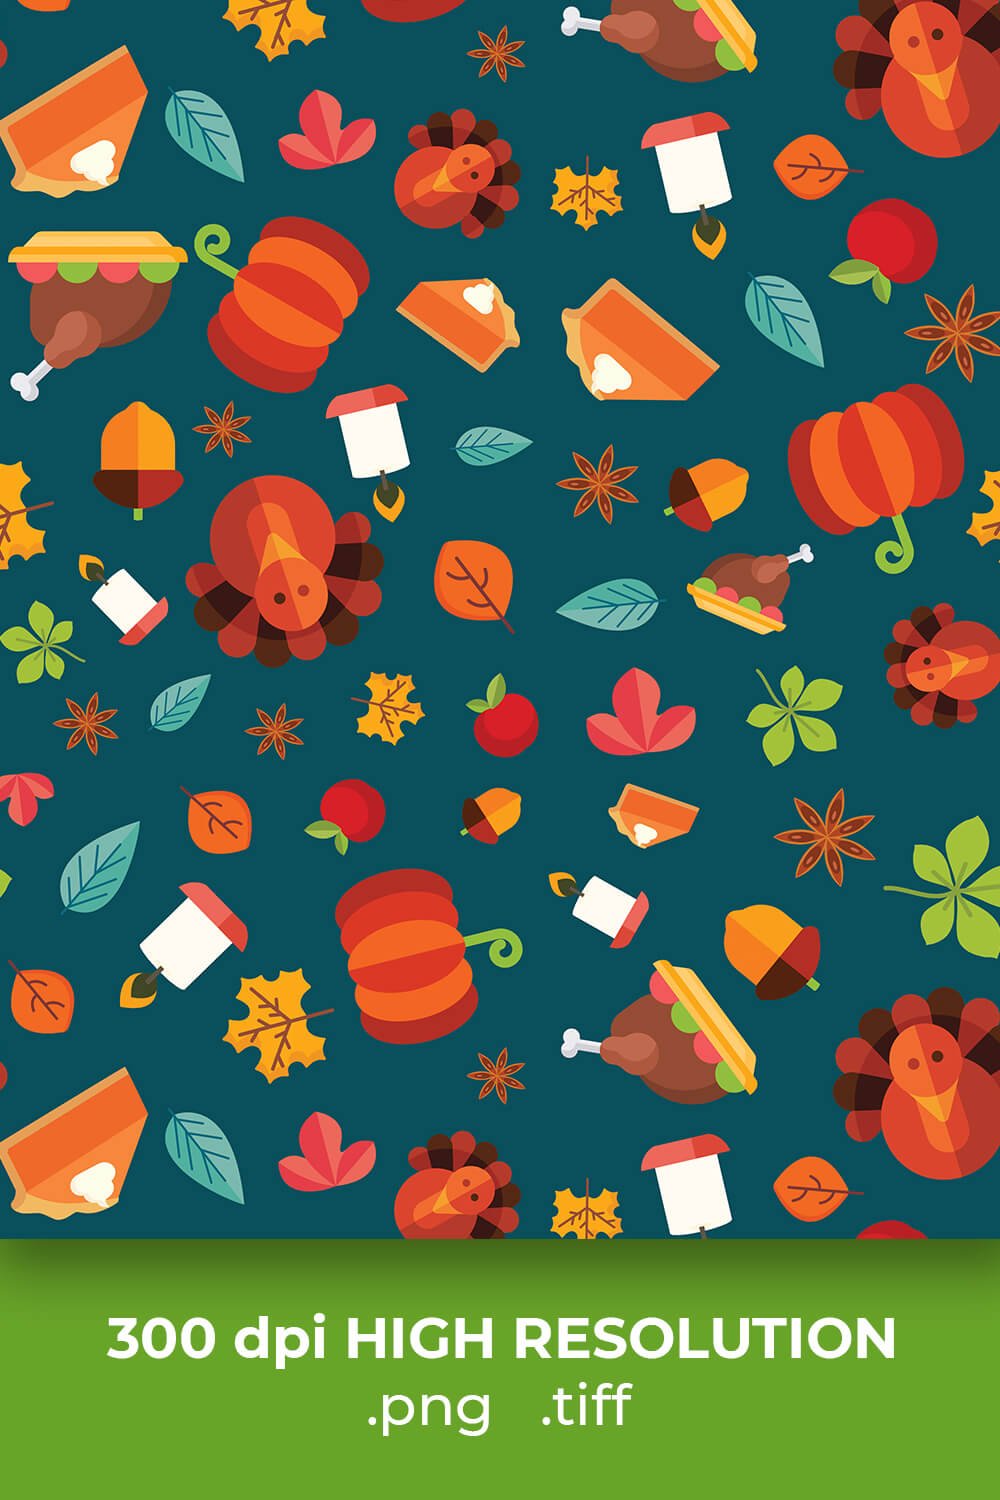 Free Thanksgiving Dinner Pattern Pinterest image.